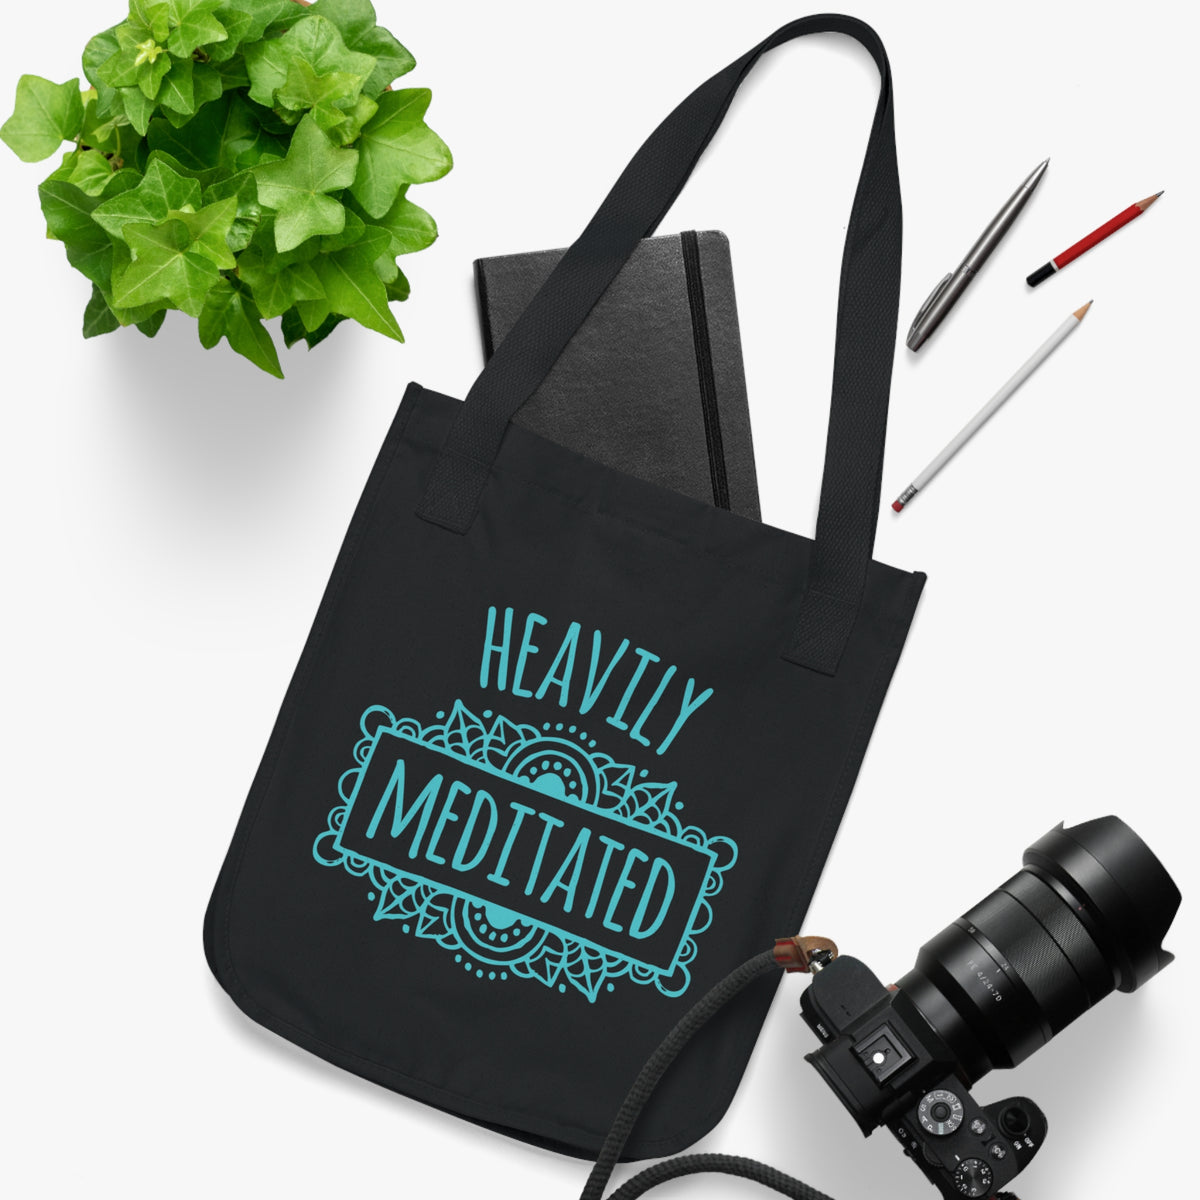 Heavily Meditated Funny Yoga Lover Tote Bag | Meditation Gift | Organic Canvas Tote Bag